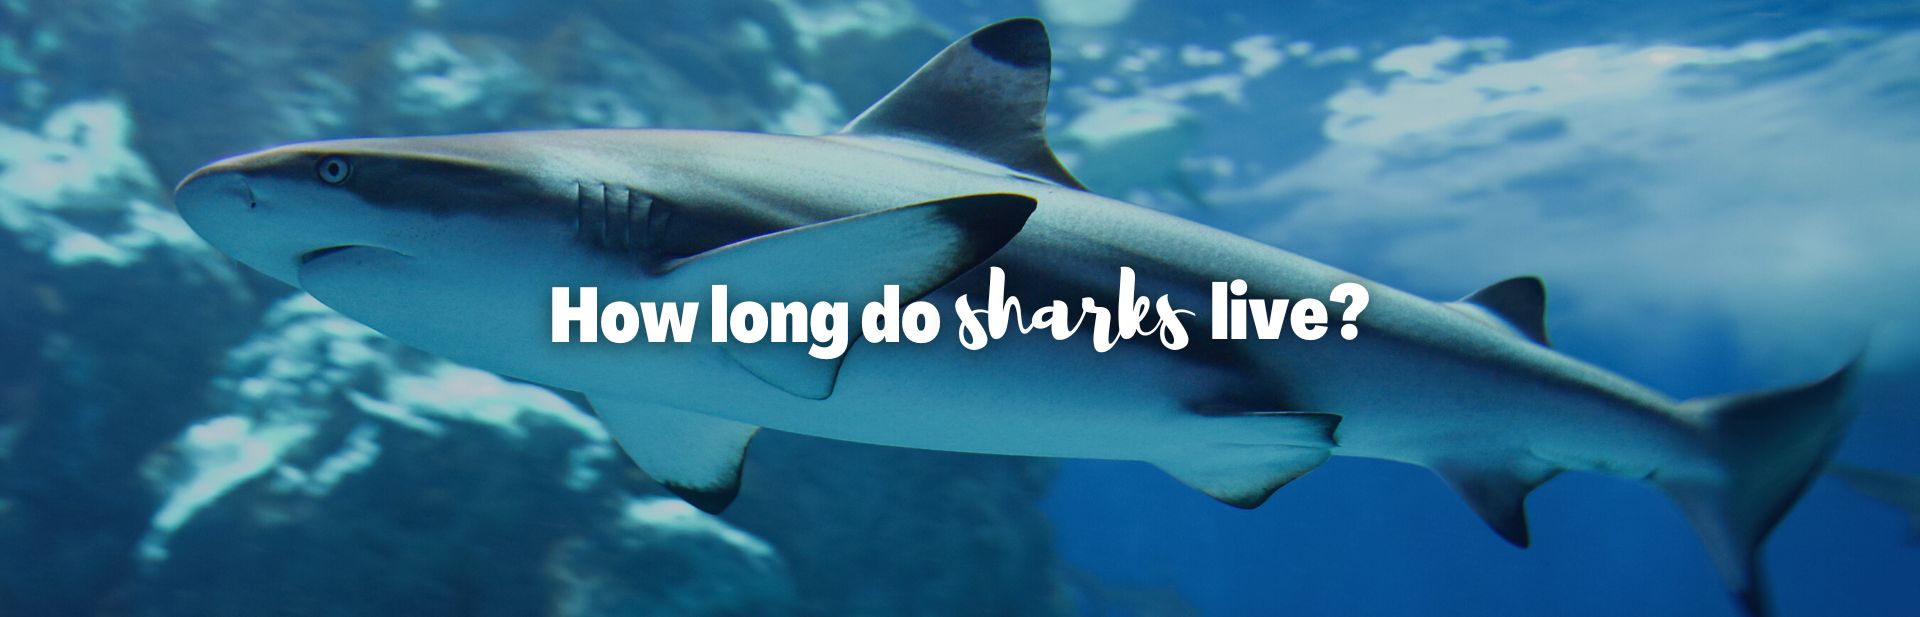 How Long Do Sharks Live? Far Longer Than You’d Think